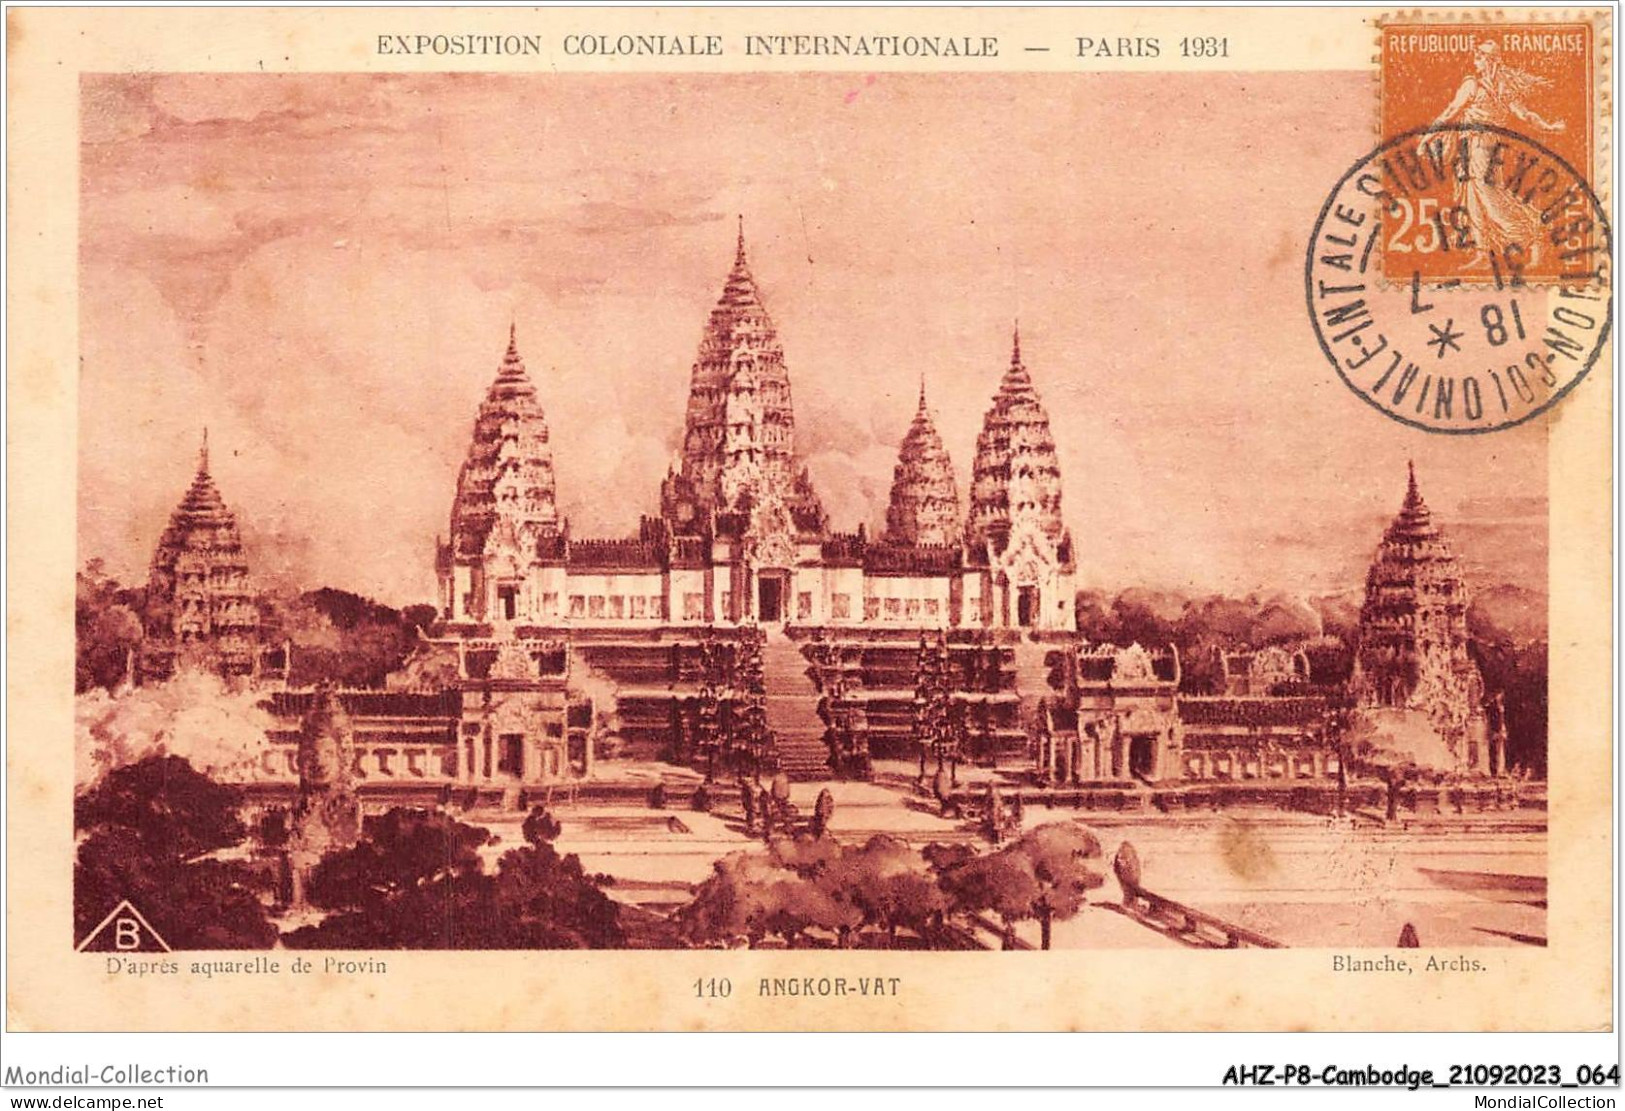 AHZP8-CAMBODGE-0715 - EXPOSITION COLONIALE INTERNATIONALE - PARIS 1931 - ANGKOR-VAT - Cambodge